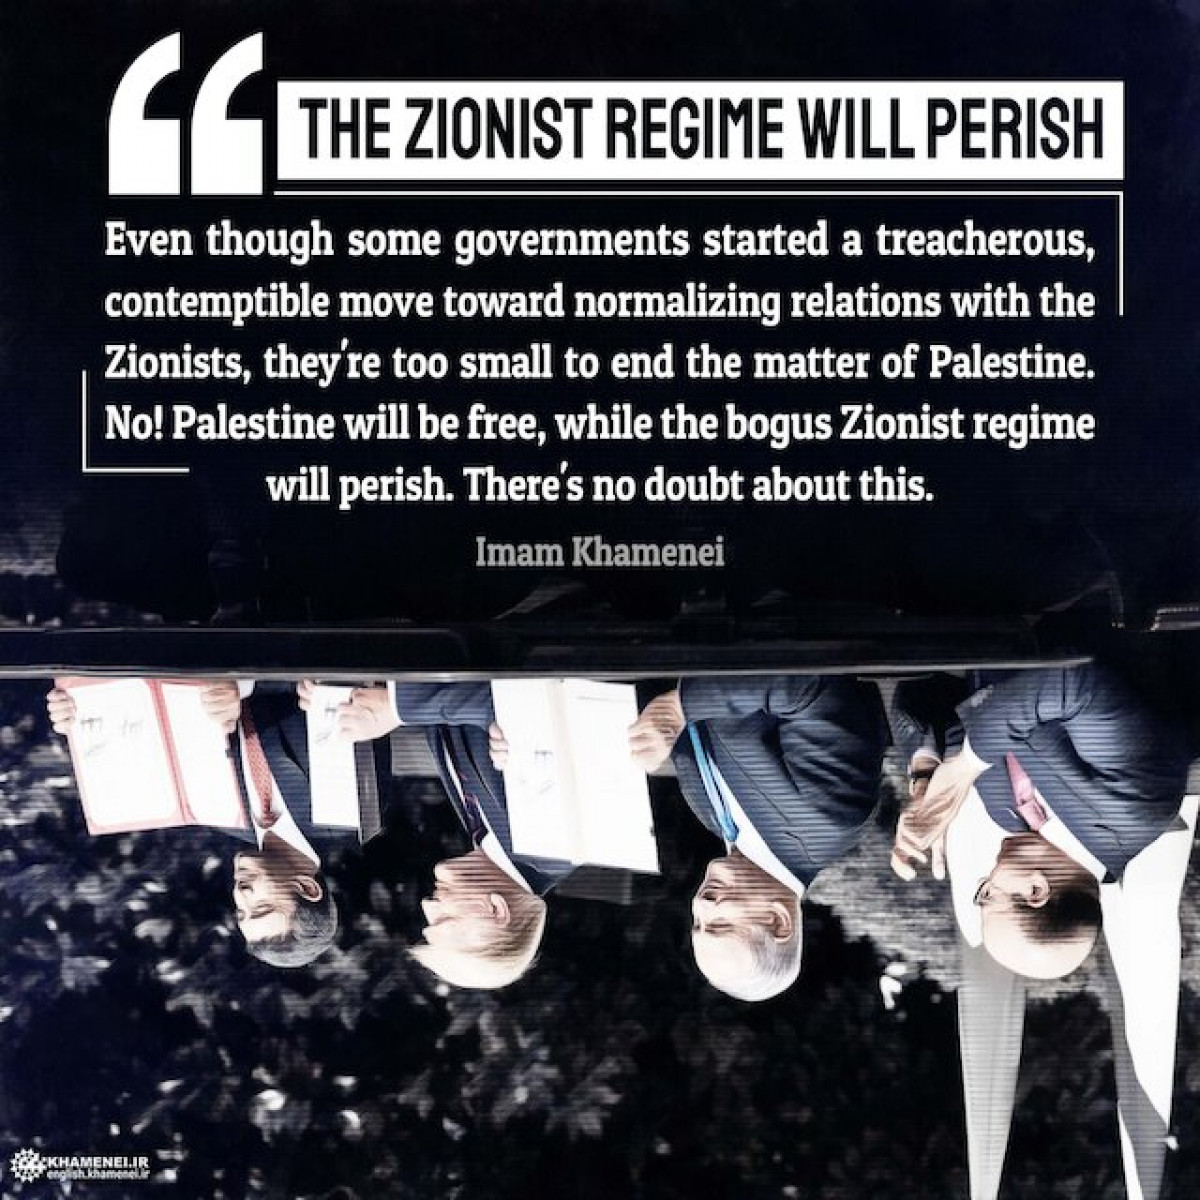 The Zionist regime will perish